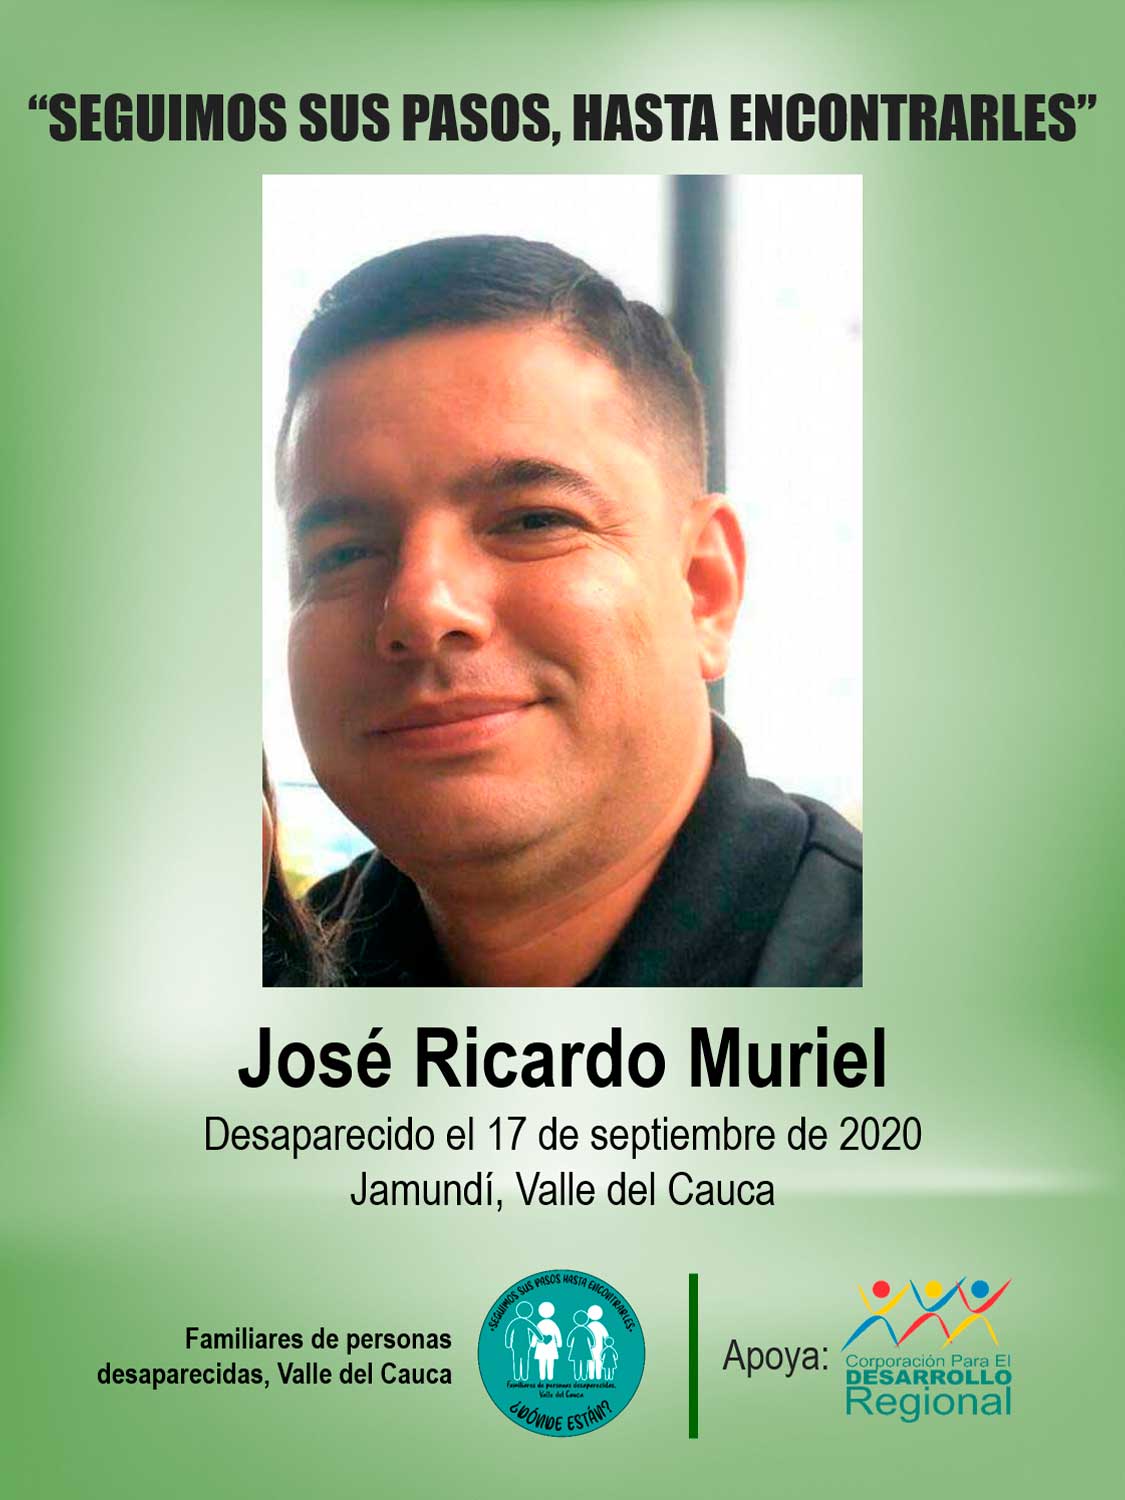 José Ricardo Muriel